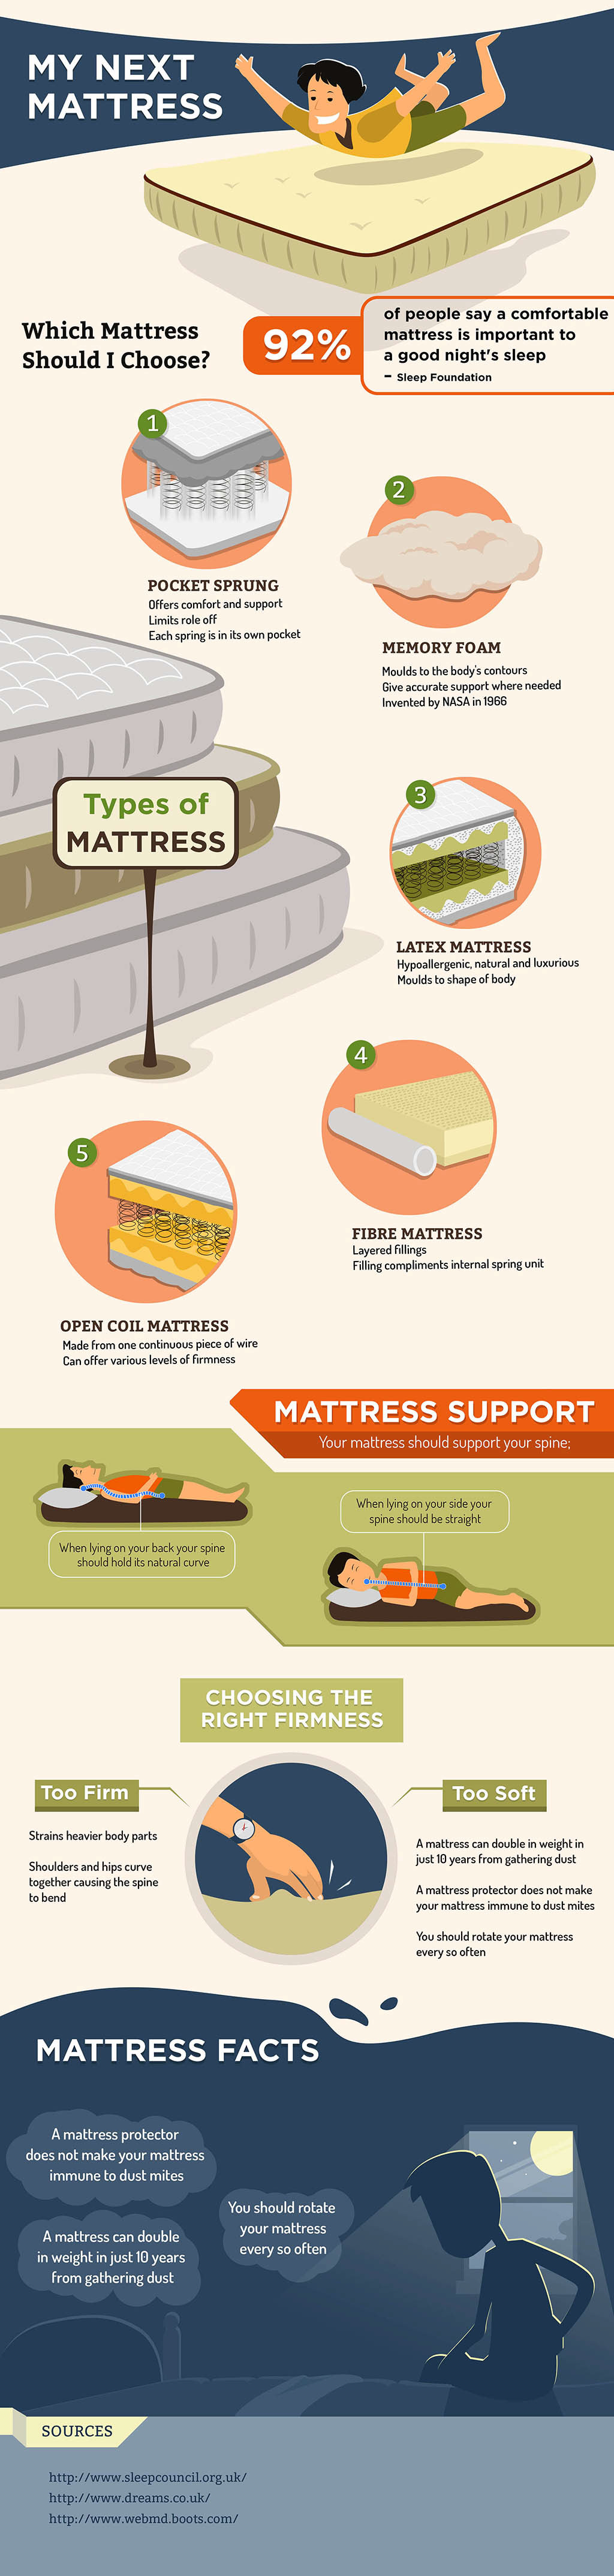 best mattress type of beds bed mattress foam mattress summer bedtime luxury dealer sleeping best sleeping position mglinfographic infographic social media marketing Visual Information data visualization